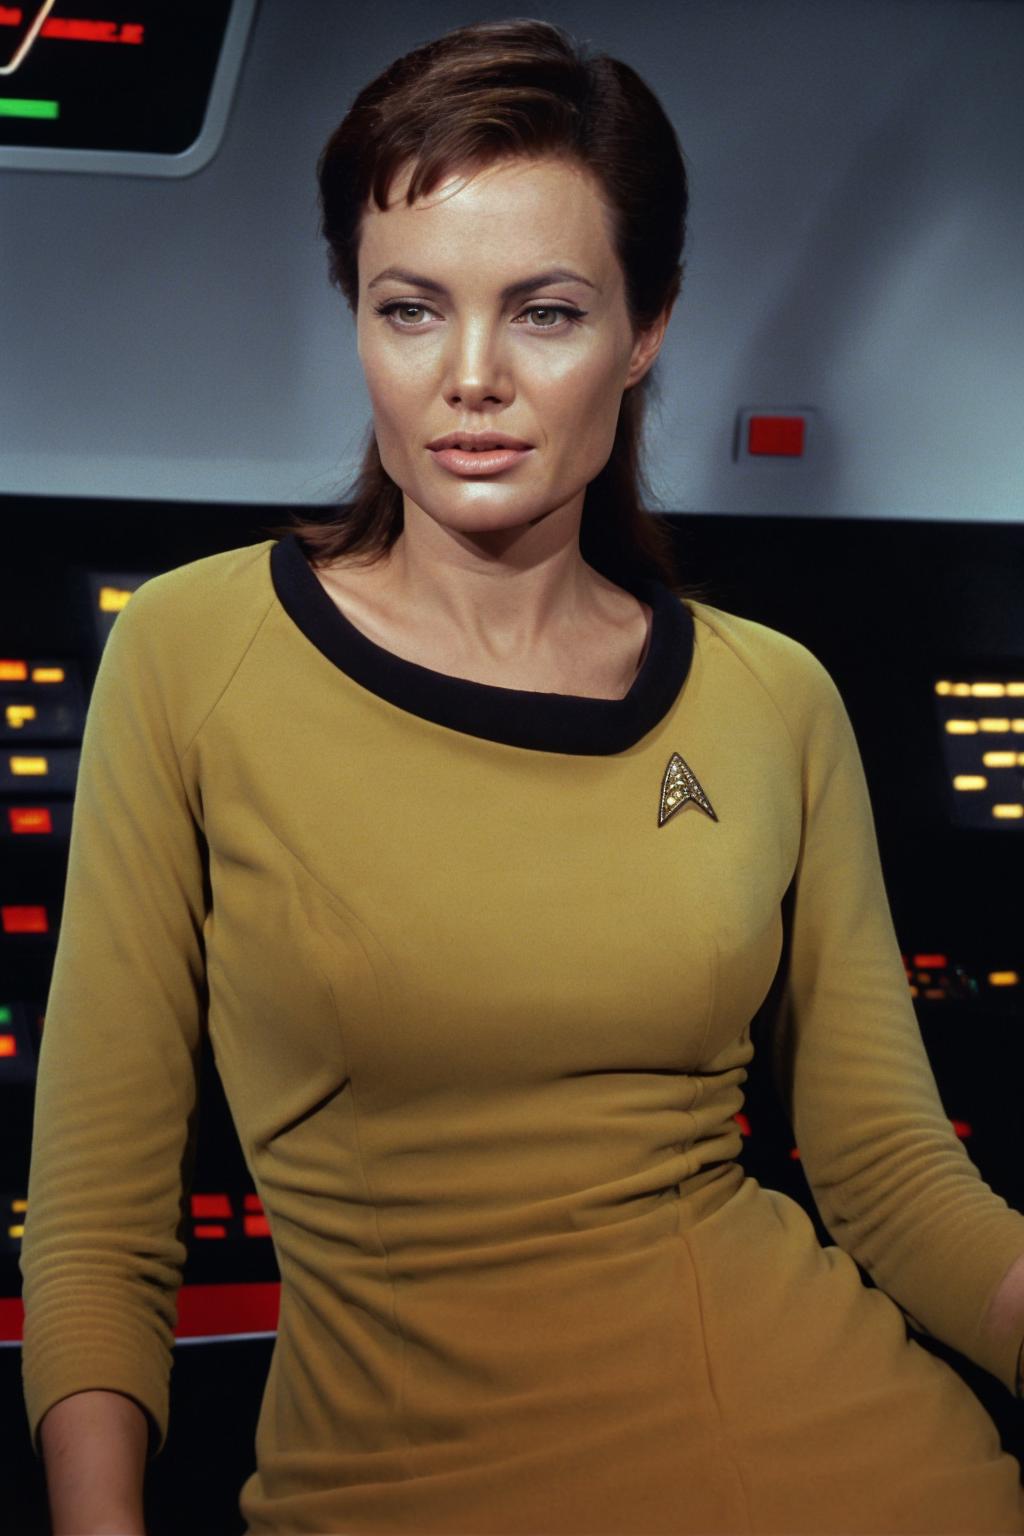 Star Trek TOS uniforms image by XX007